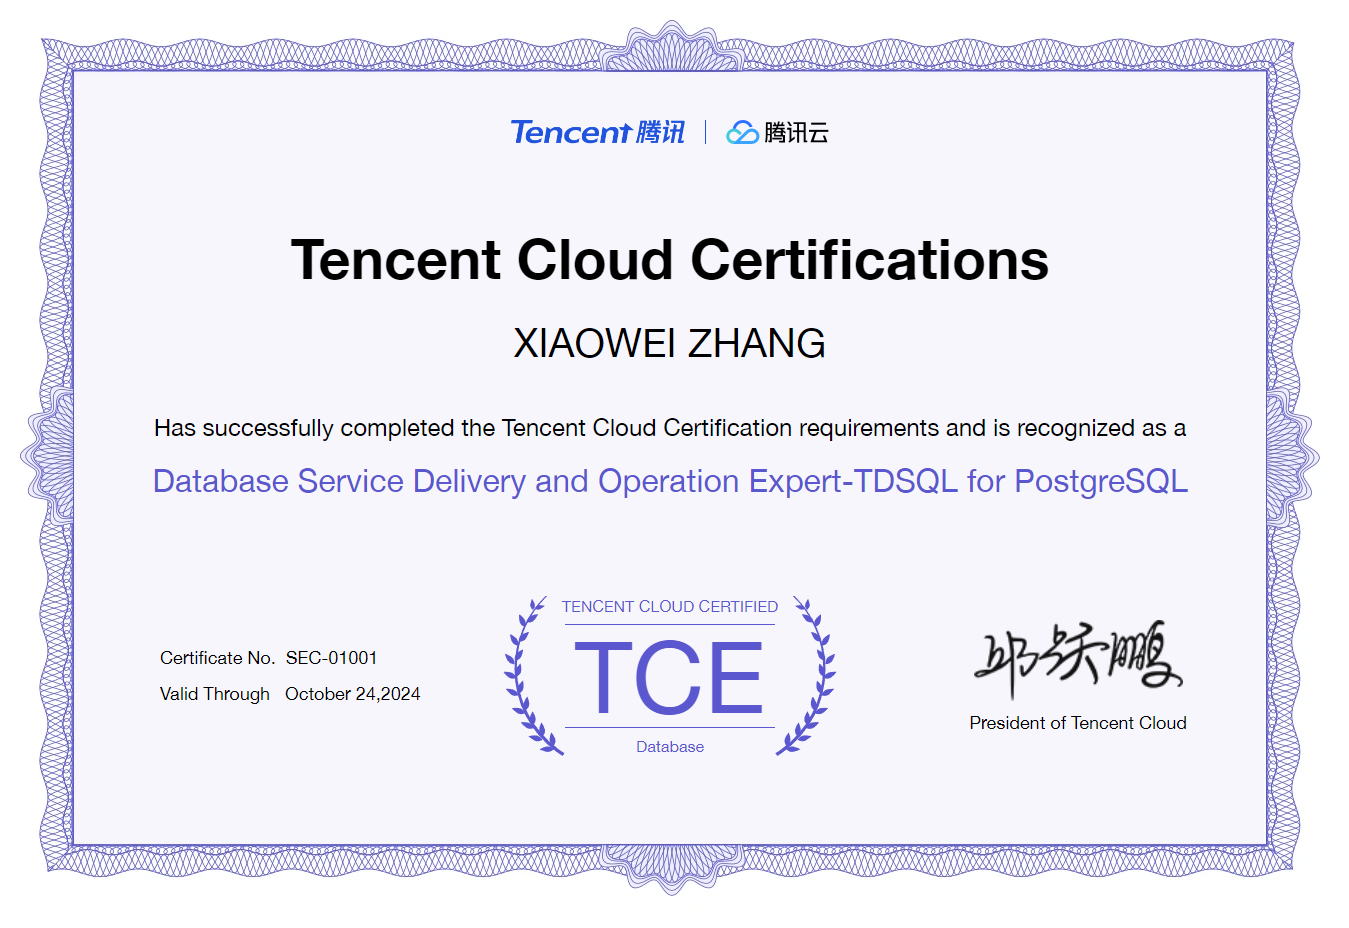 TDSQL For PostgreSQL高级TCCE认证证书